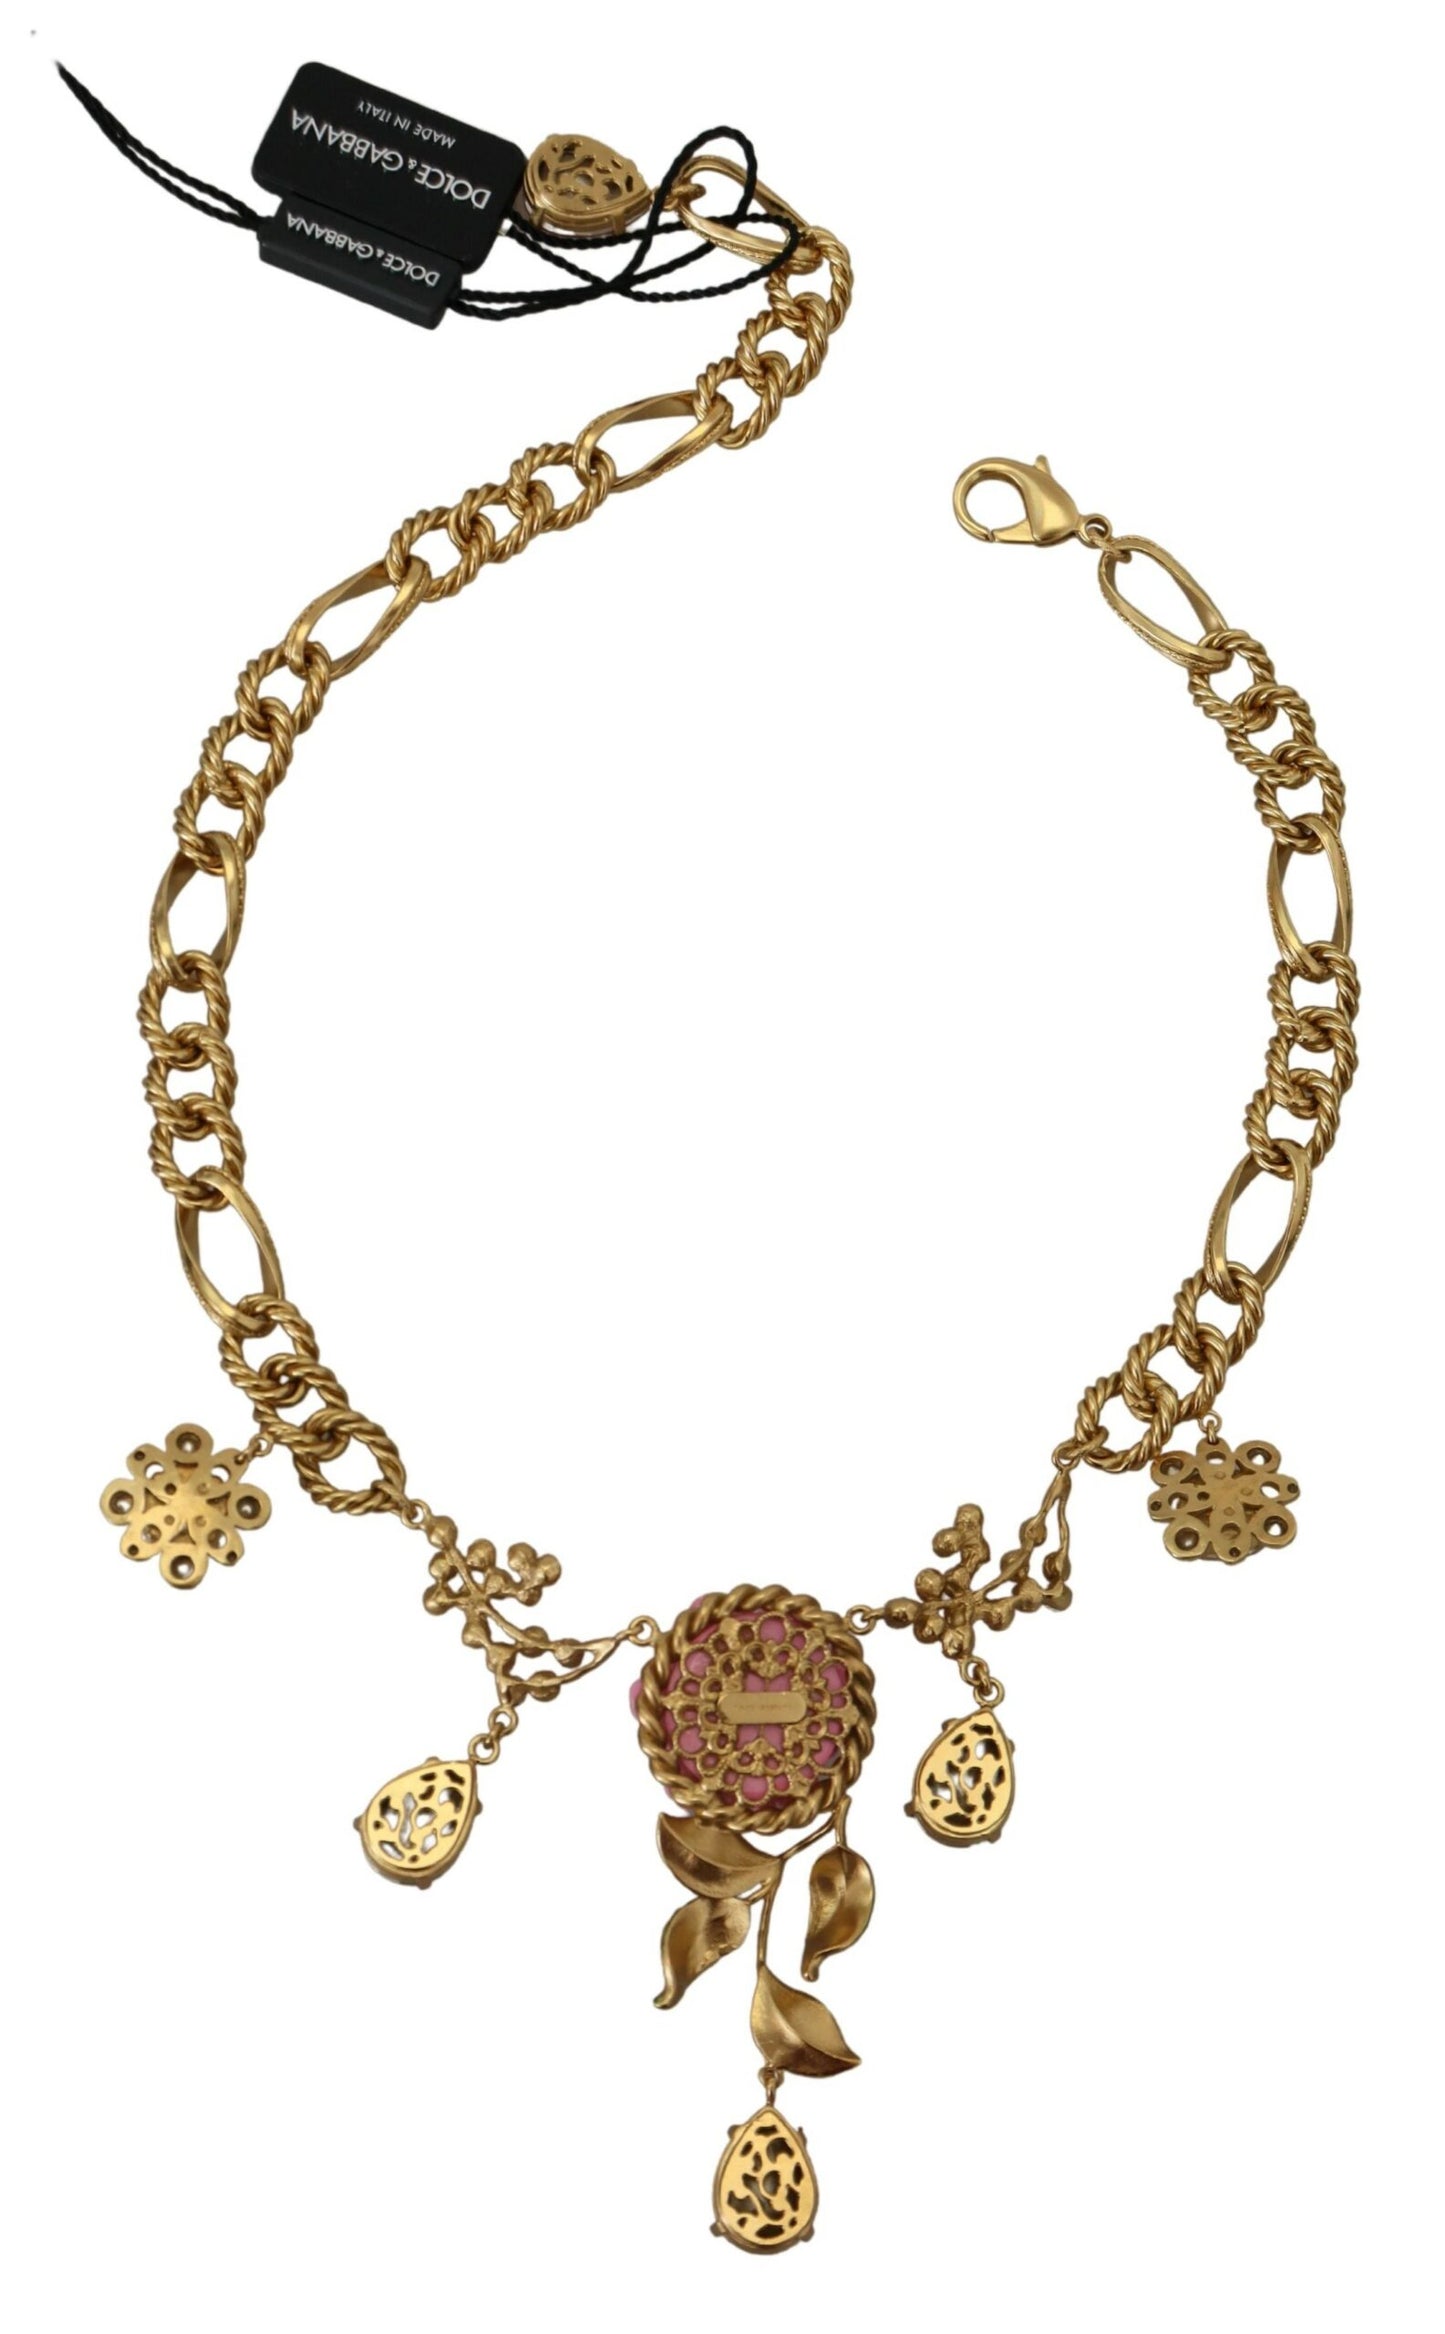 Elegant Floral Roses Gold-Plated Necklace